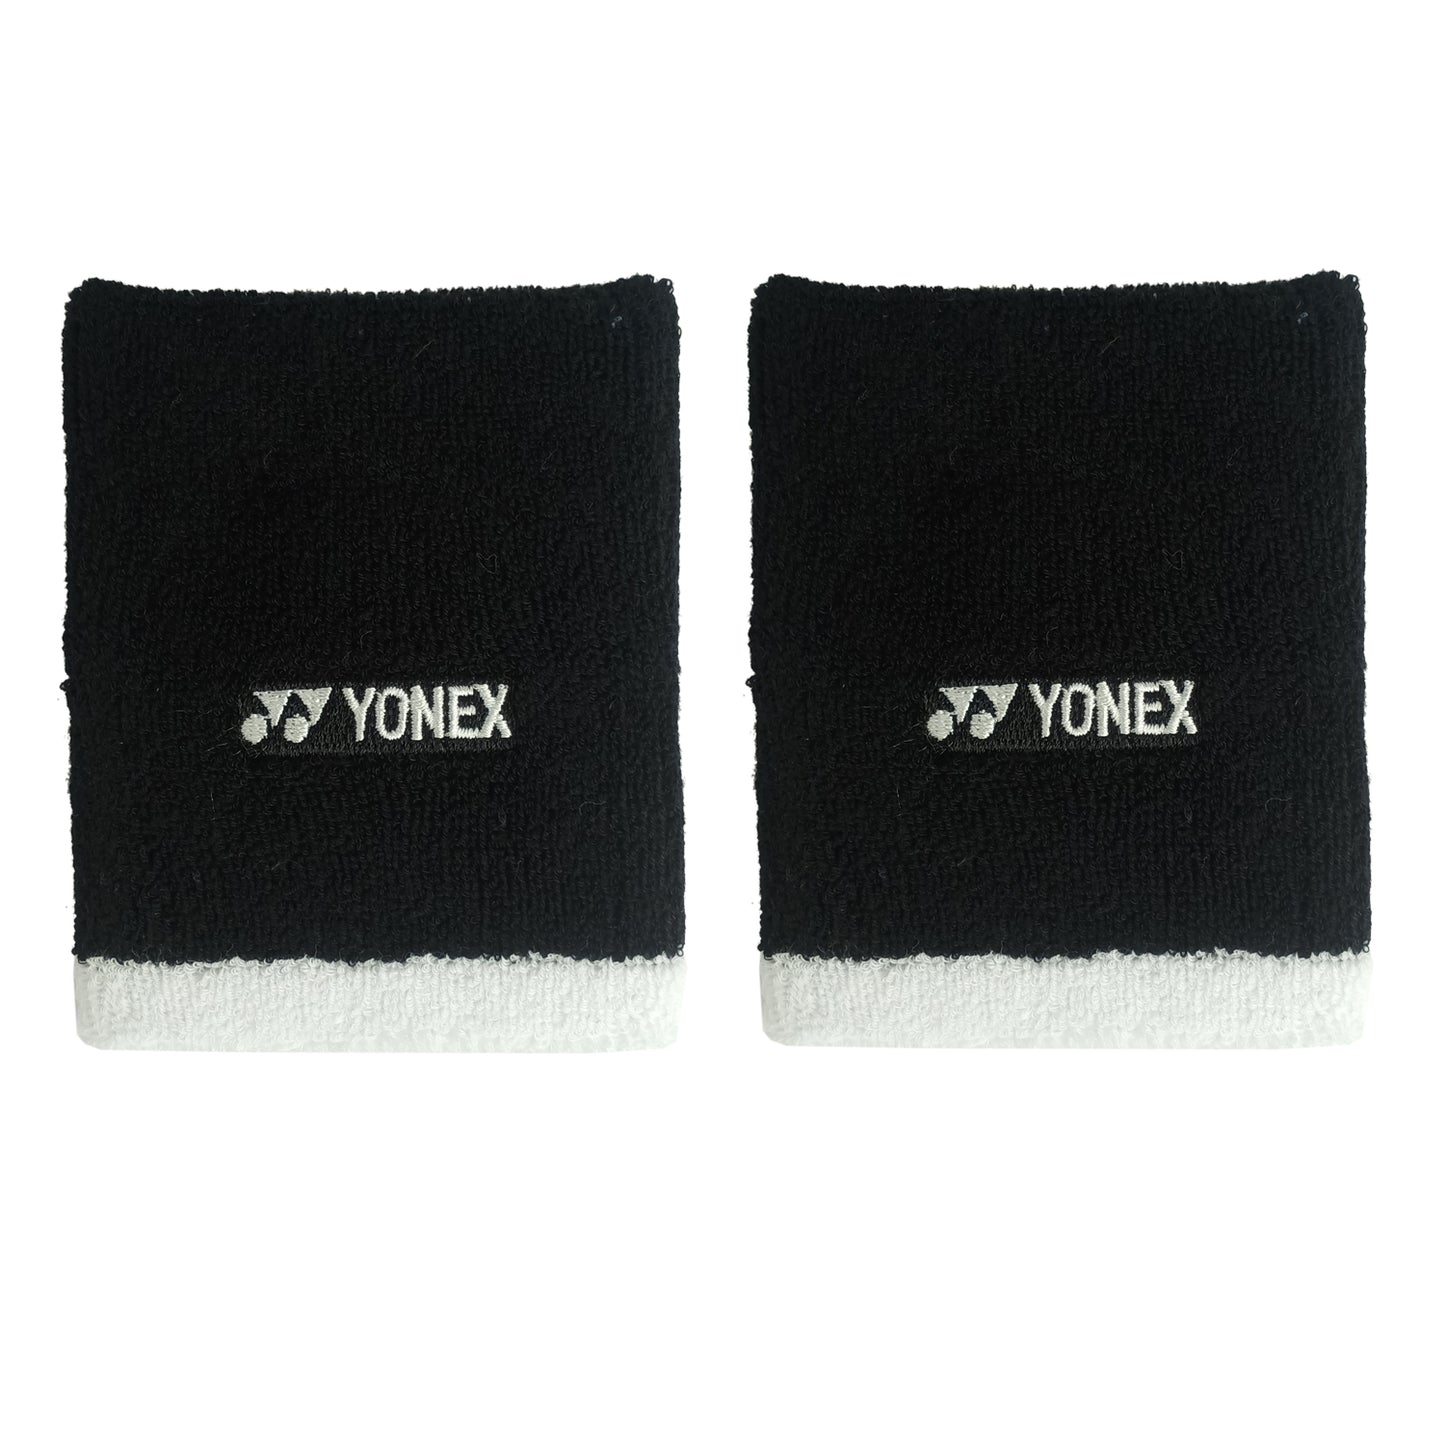 Yonex 11501 Wrist Band, Black/White (Pack of 2) - Best Price online Prokicksports.com